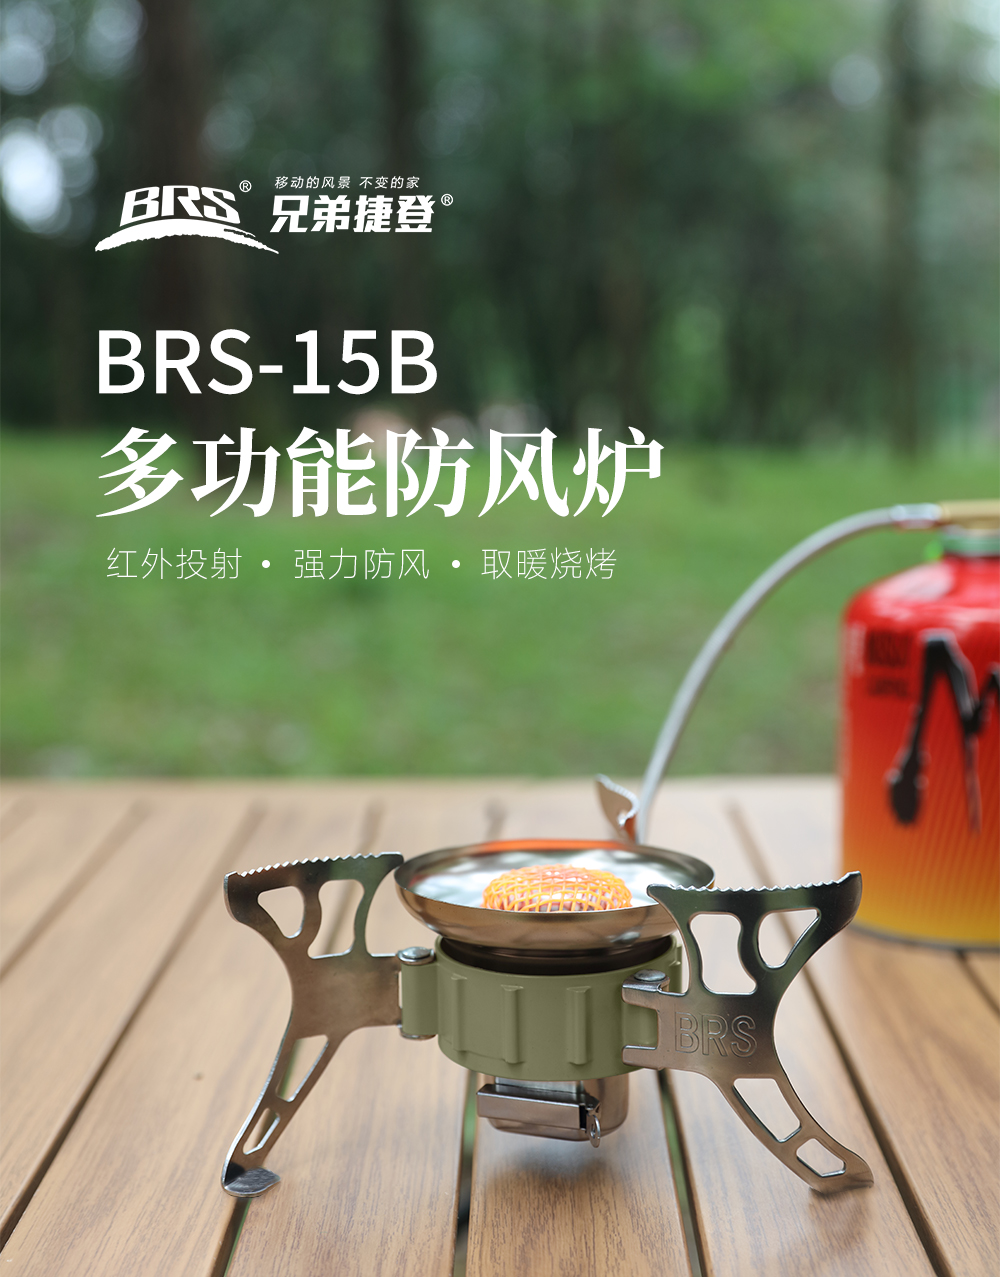 BRS-15B_01.jpg